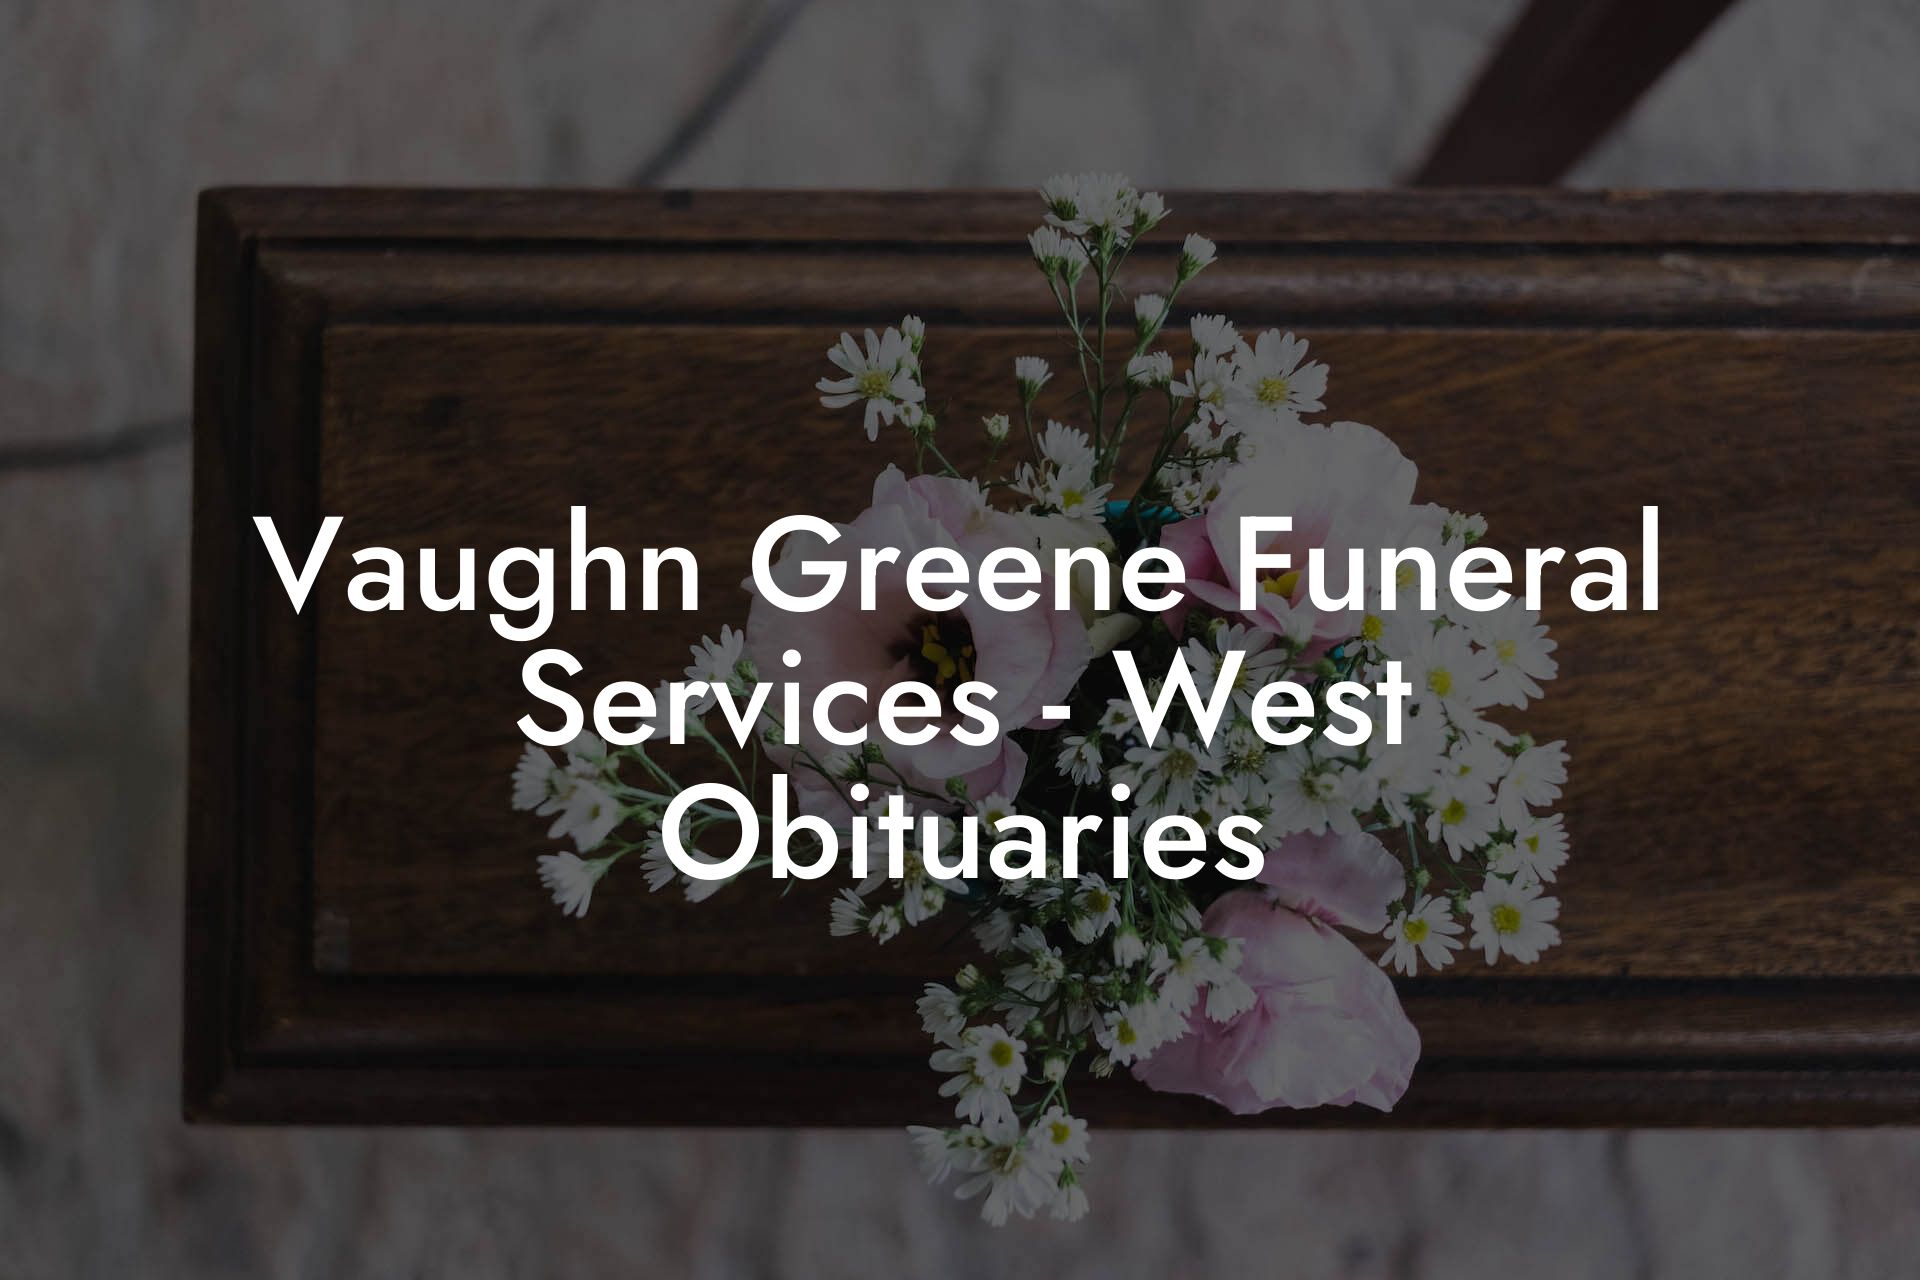 Vaughn Greene Funeral Services - West Obituaries